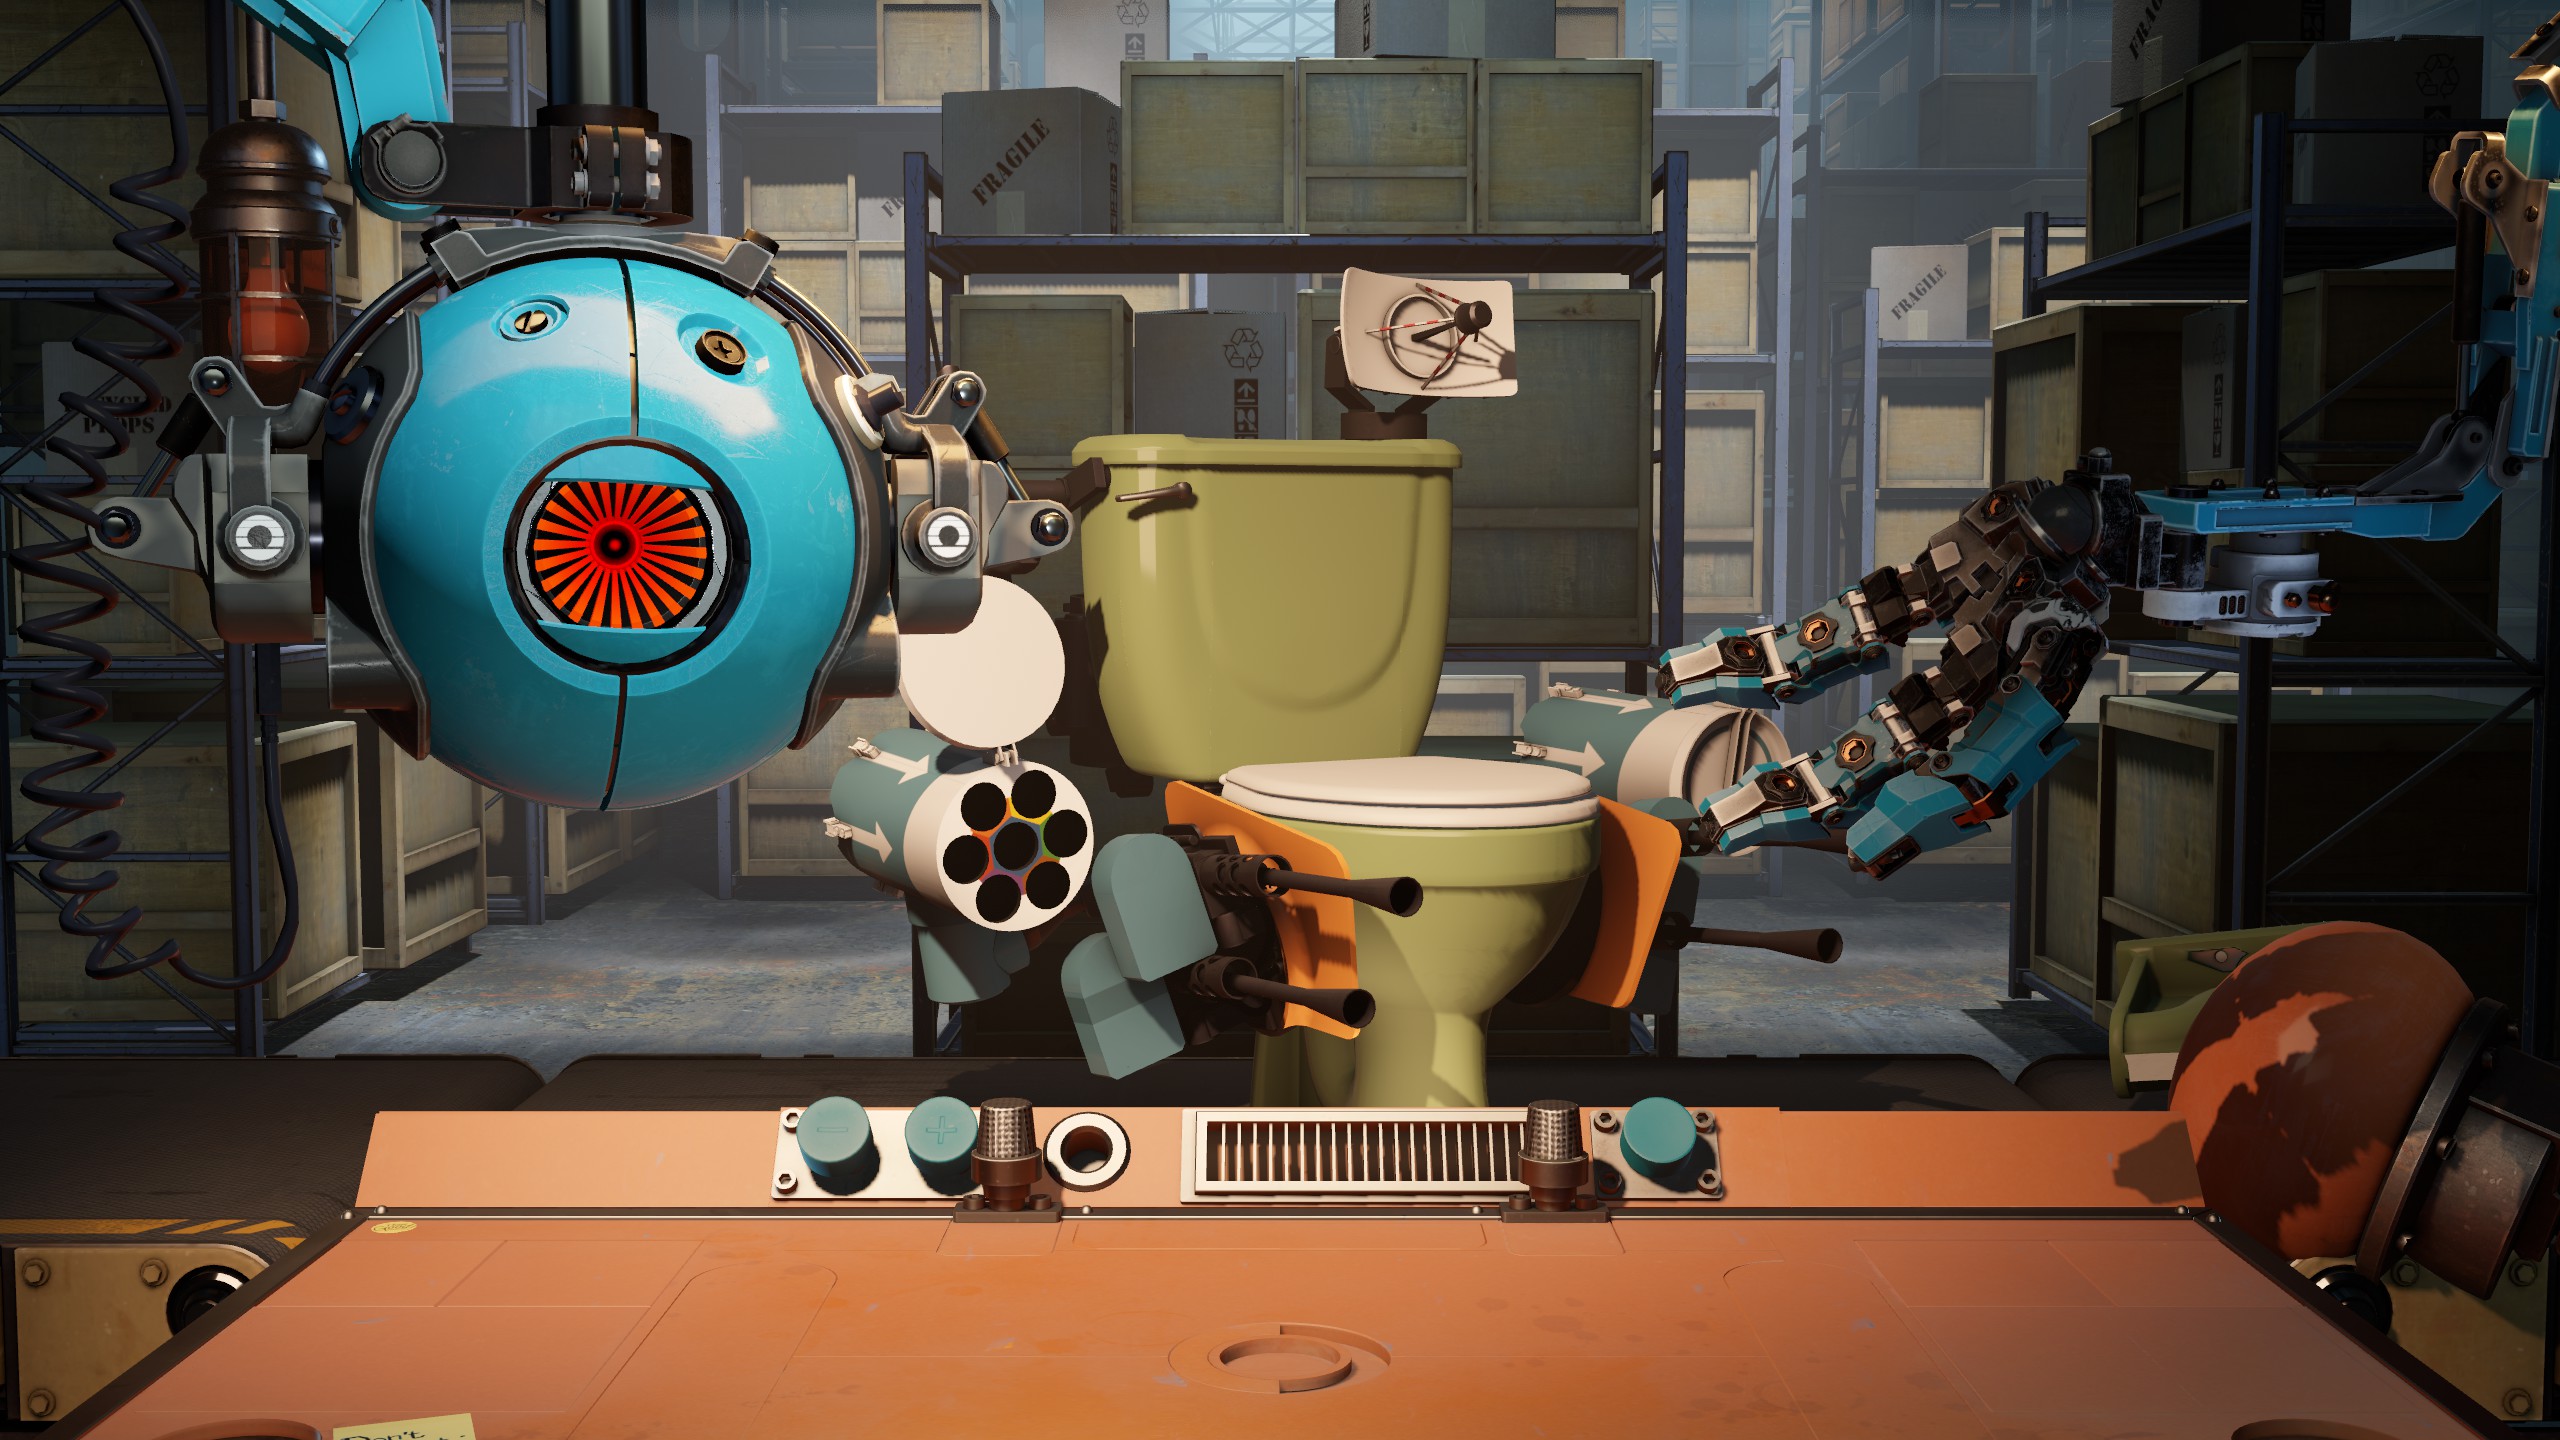  Weaponize toilets in Valve's hilarious short game Aperture Desk Job 